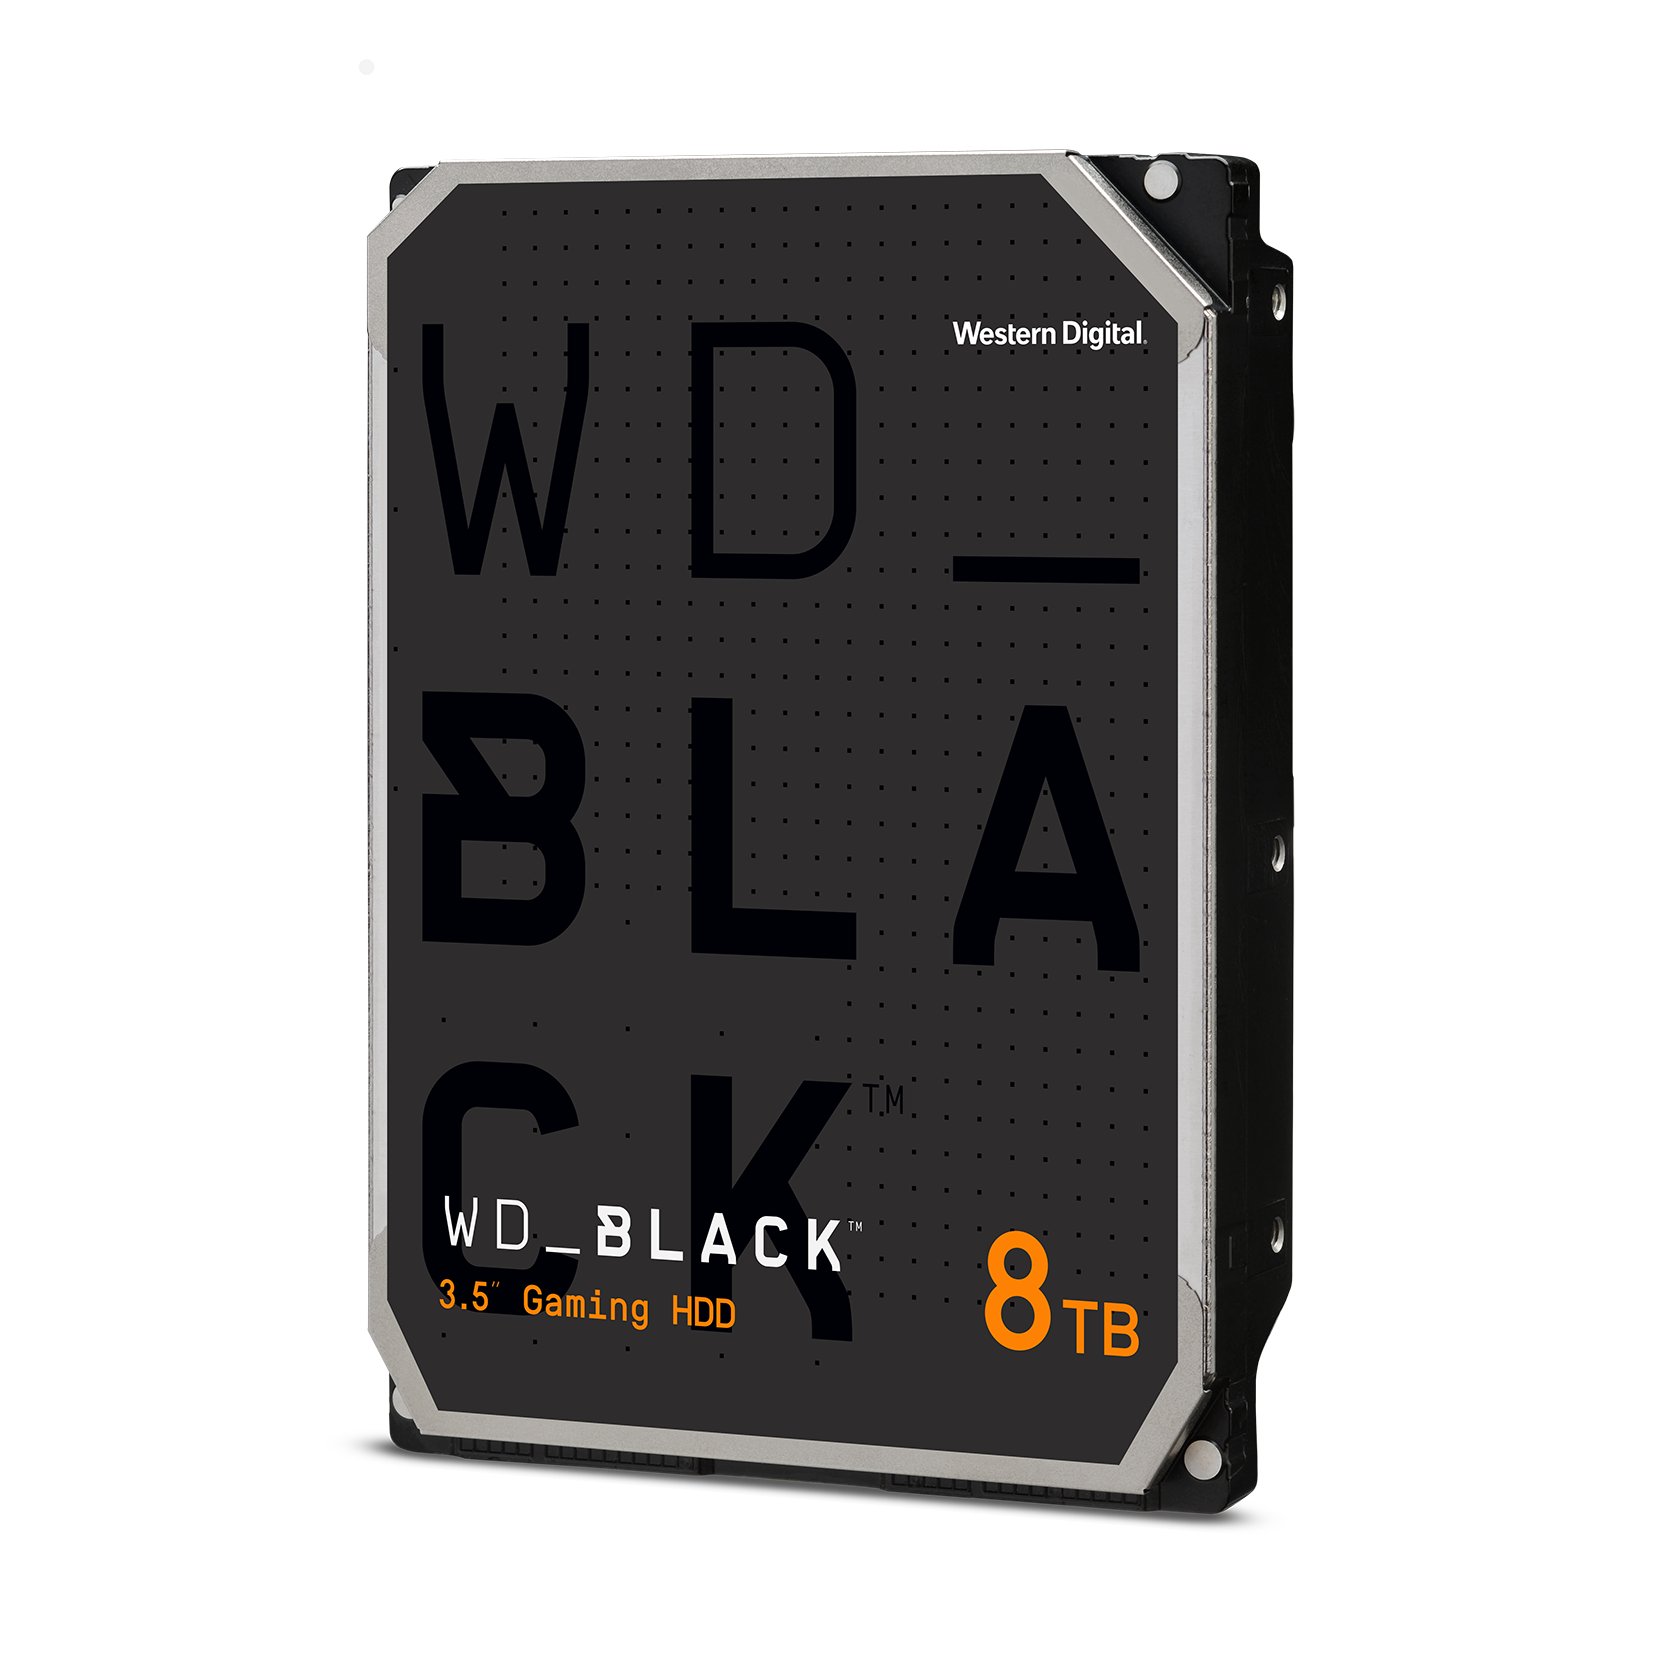 WD_BLACK™ Gaming Hard Drive | Digital